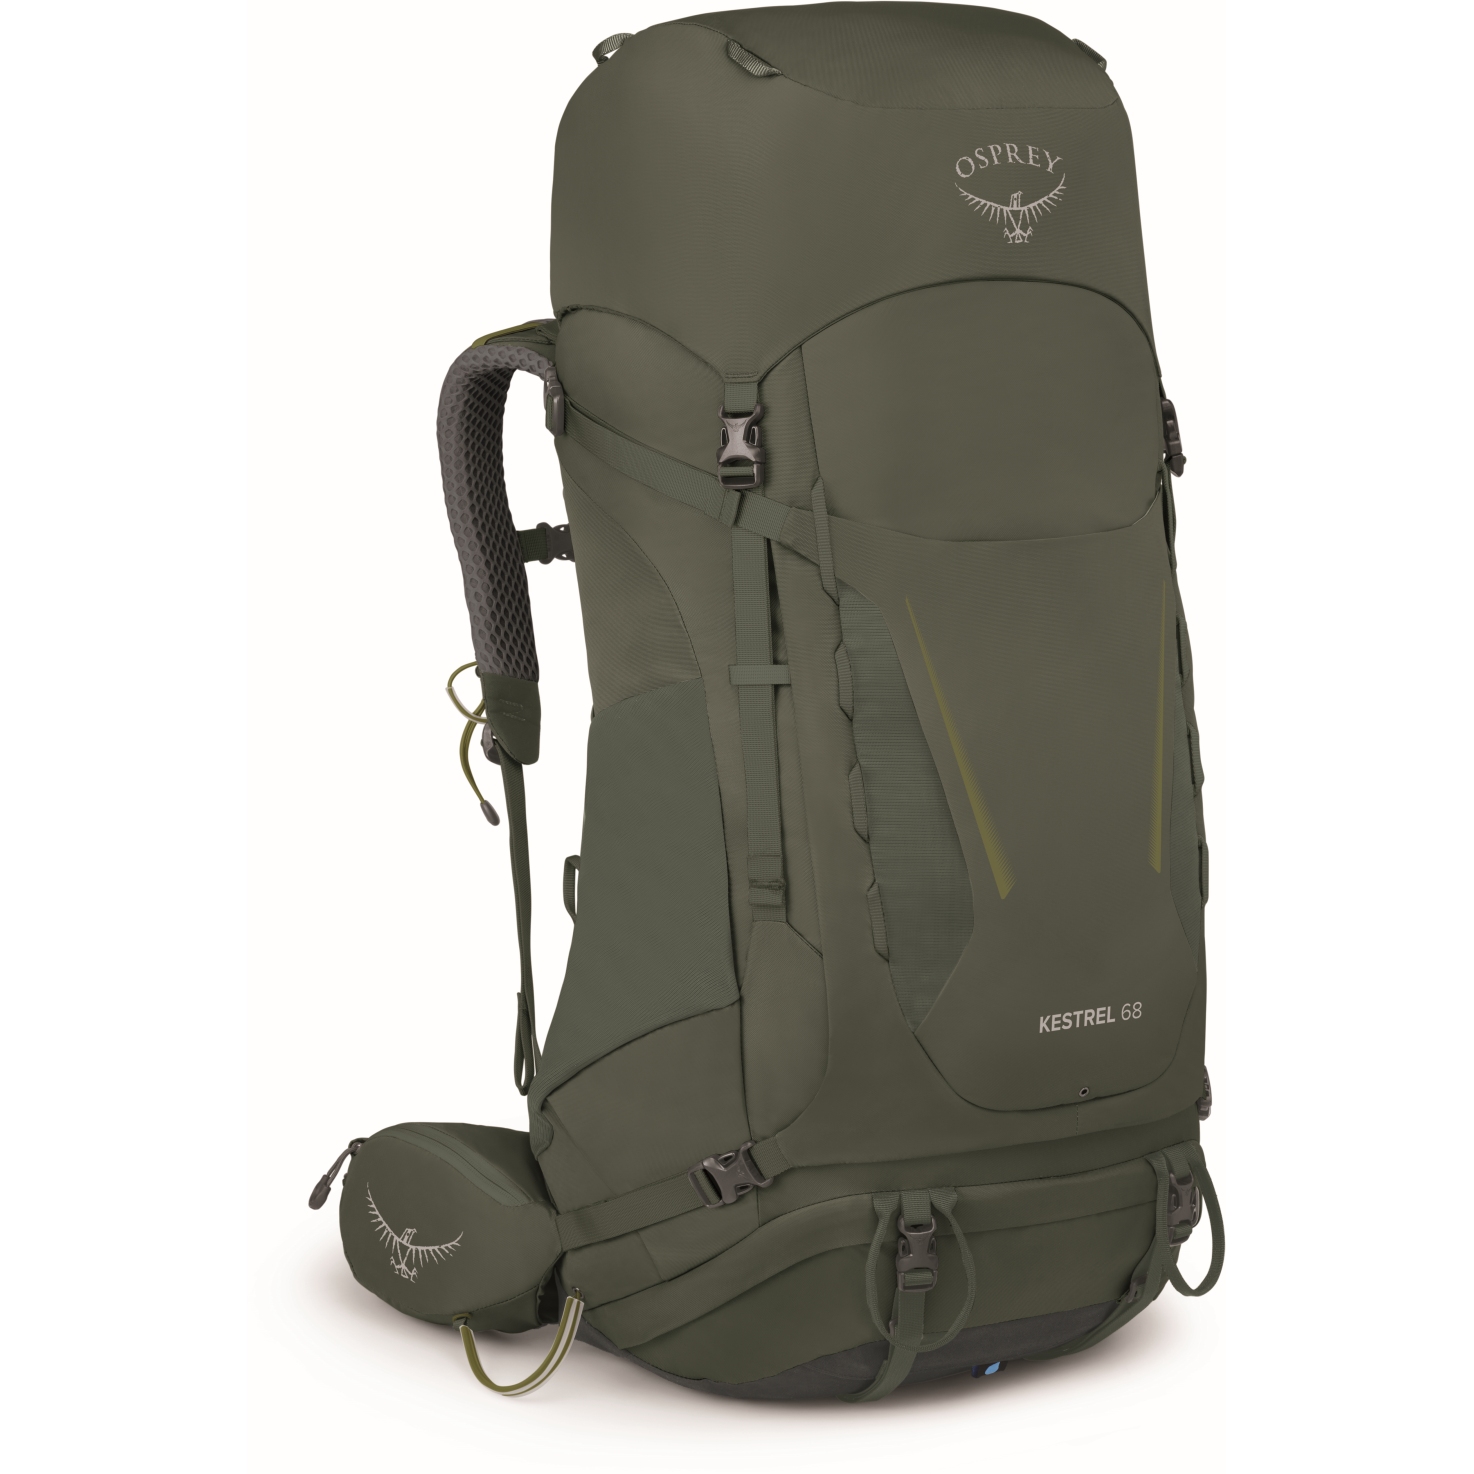 Picture of Osprey Kestrel 68 Backpack - Bonsai Green - S/M